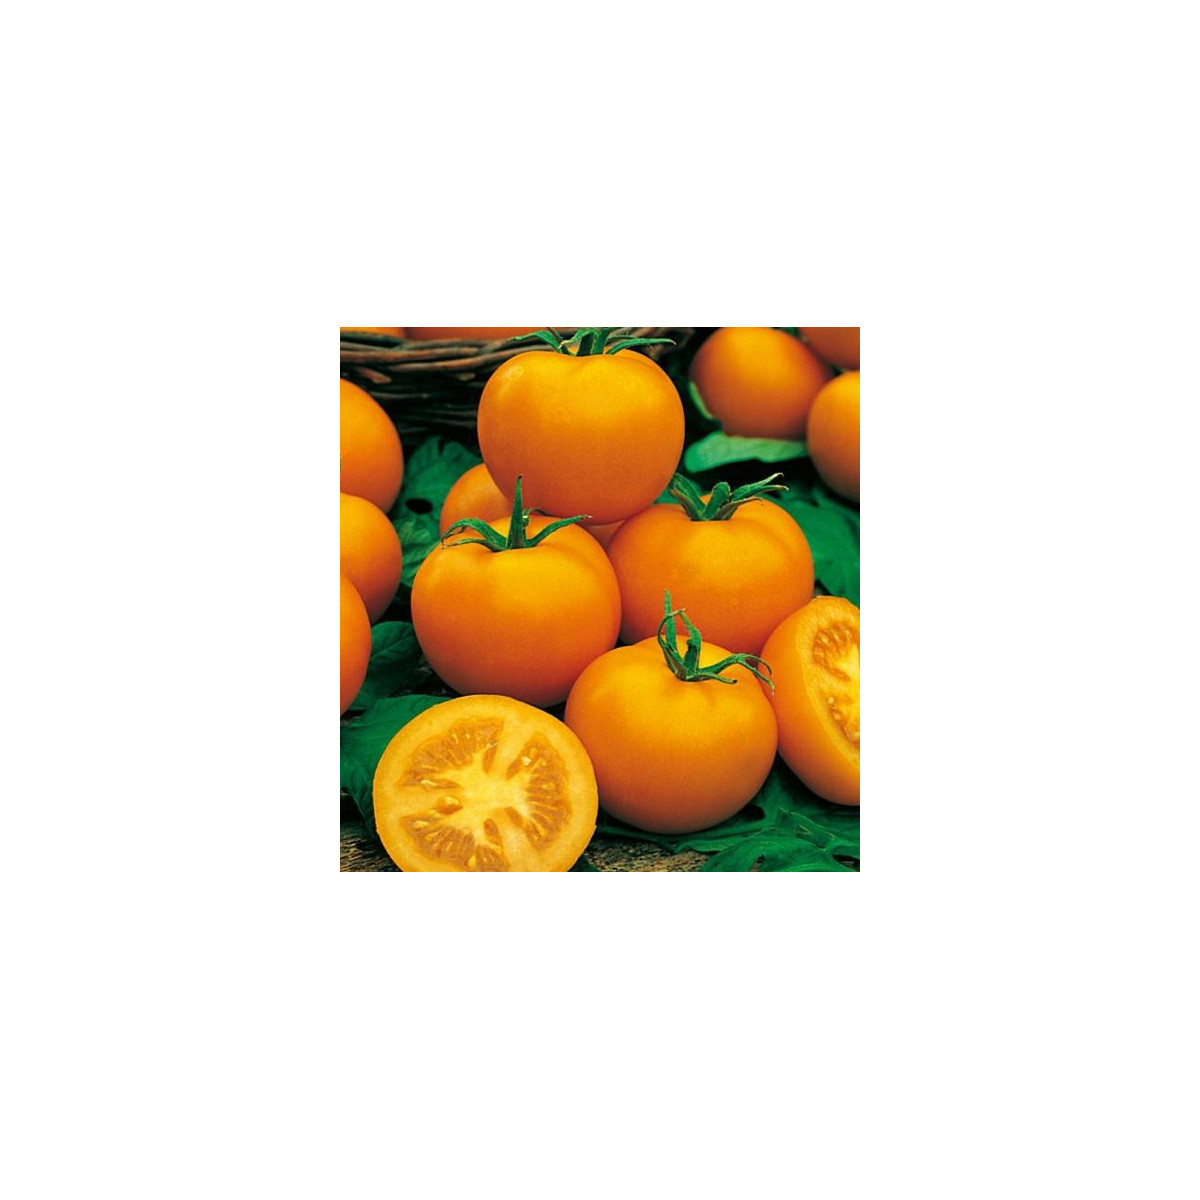 Rajče Zlatá královna - Solanum lycopersicum - semena rajčete - 10 ks